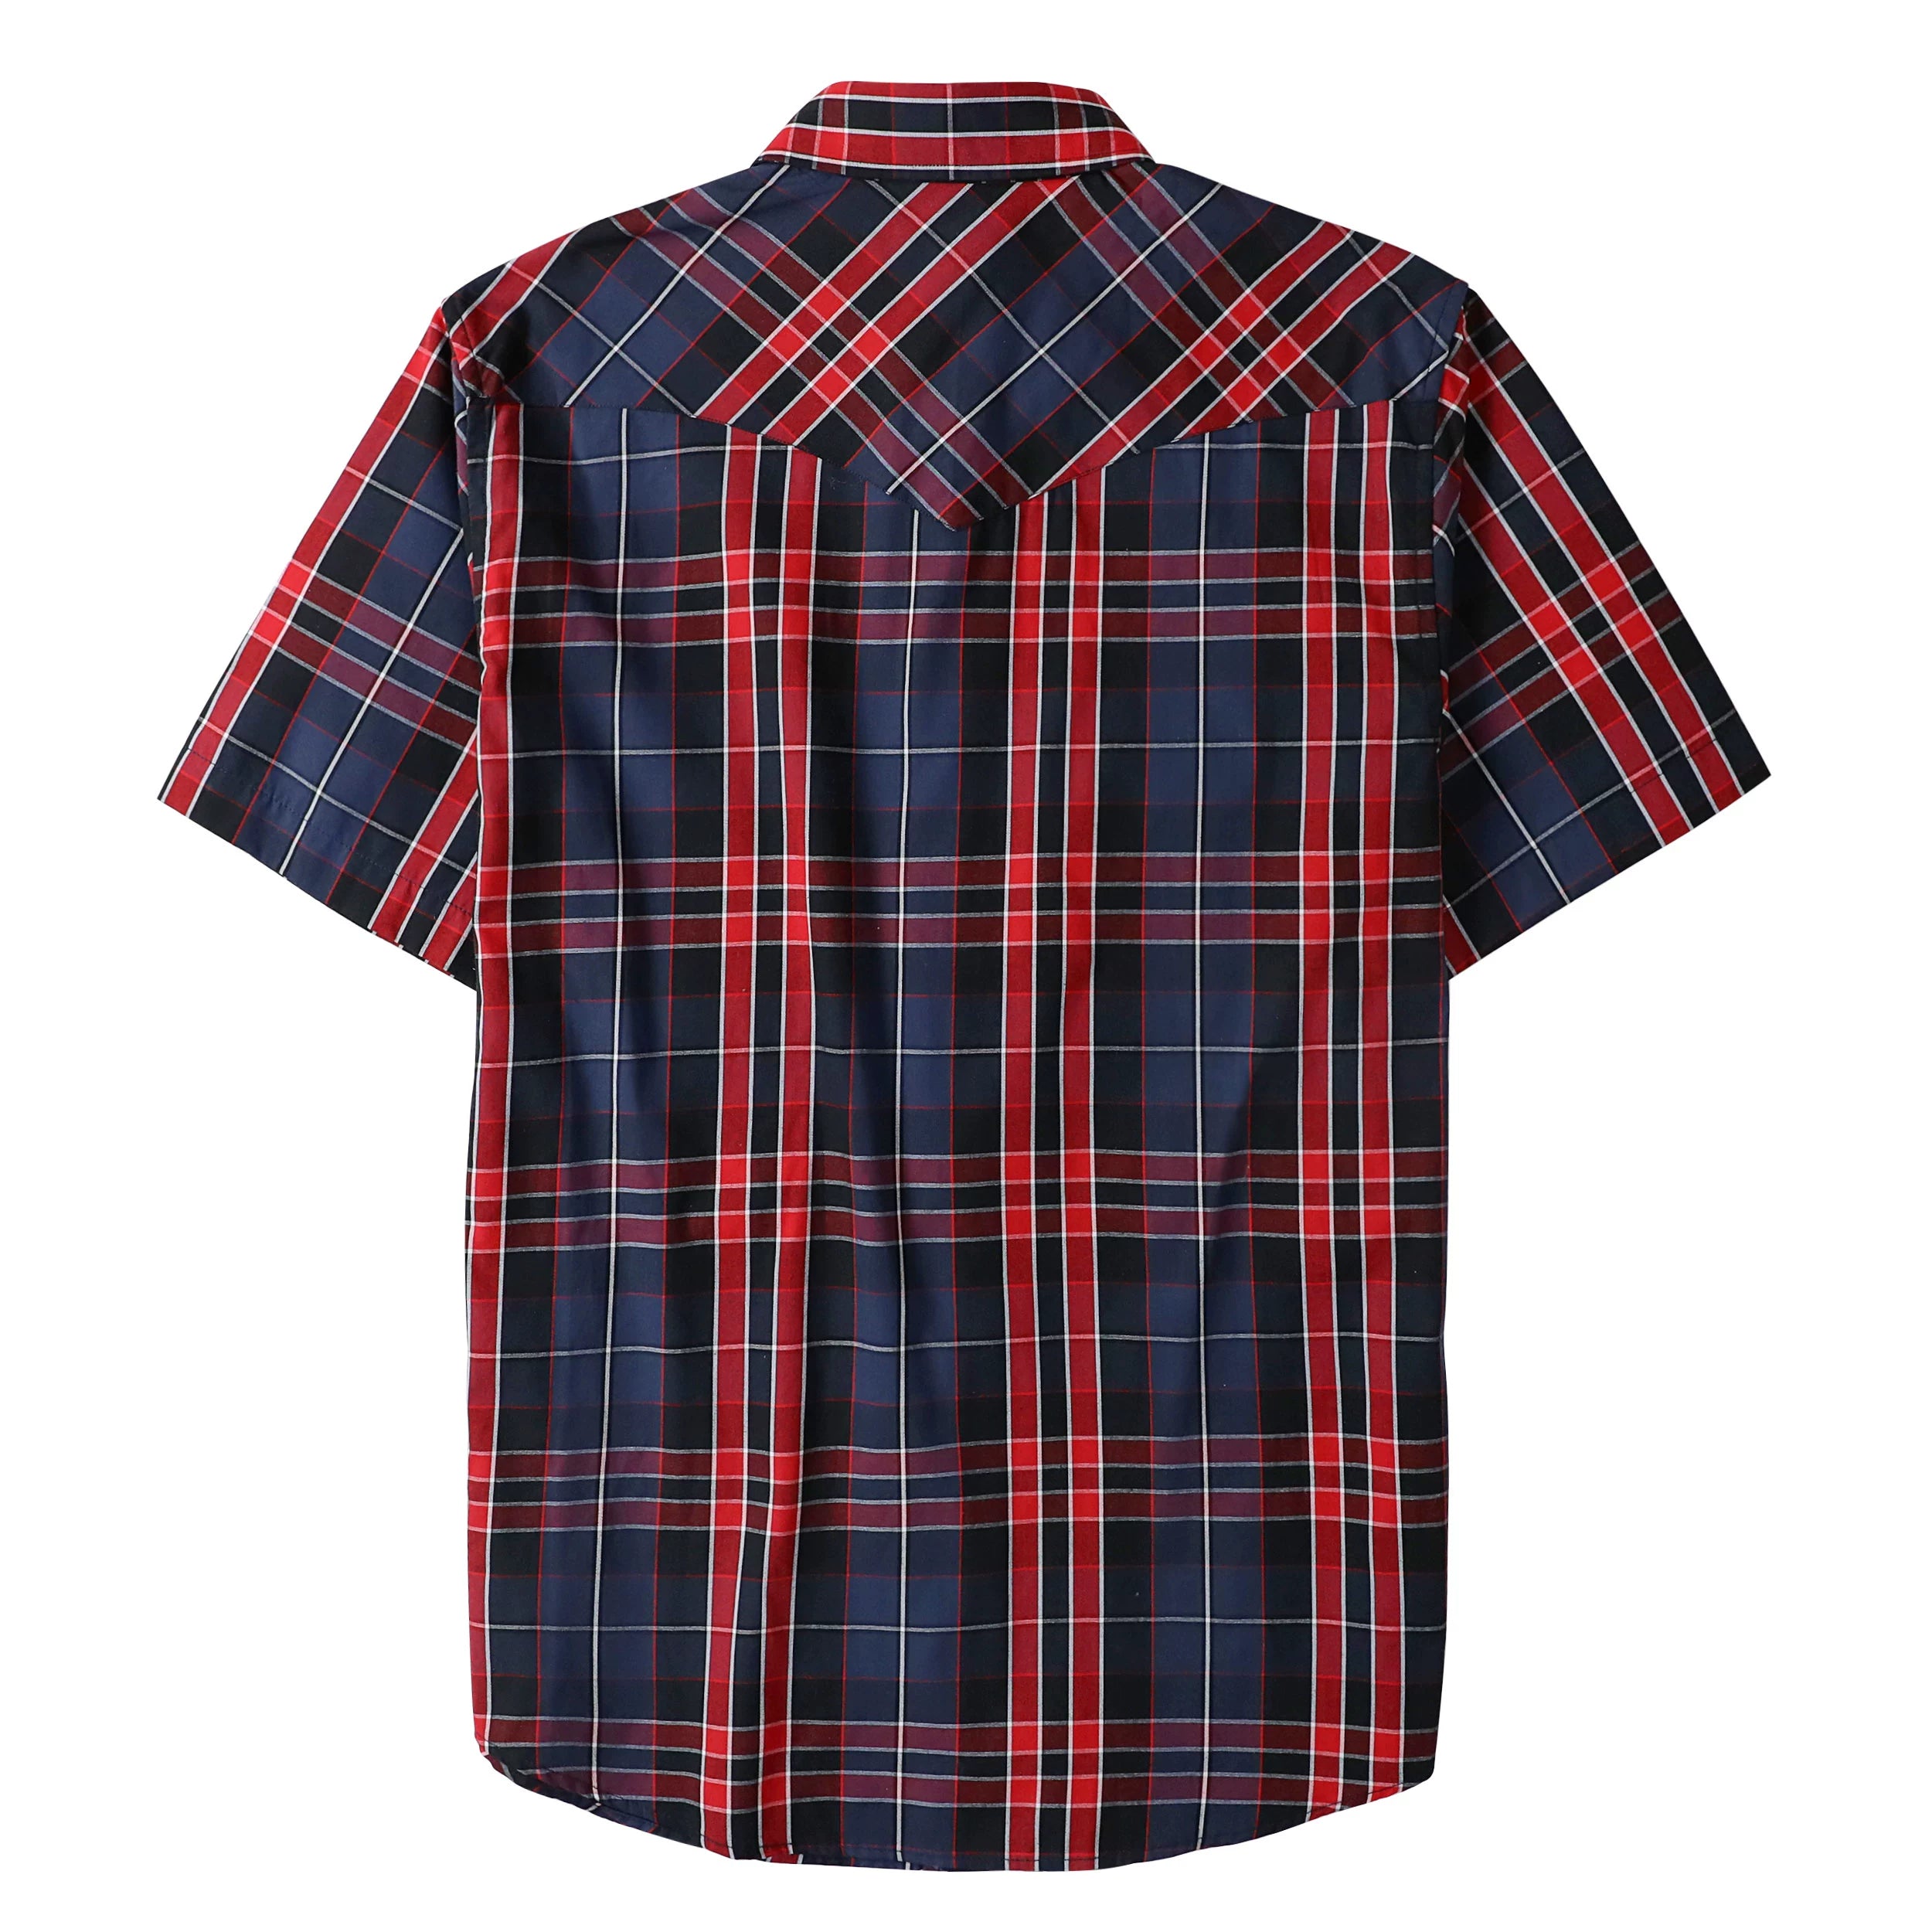 Dubinik® Western Shirts for Men Short Sleeve Plaid Pearl Snap Shirts for Men Button Up Shirt Cowboy Casual Work Shirt#41026